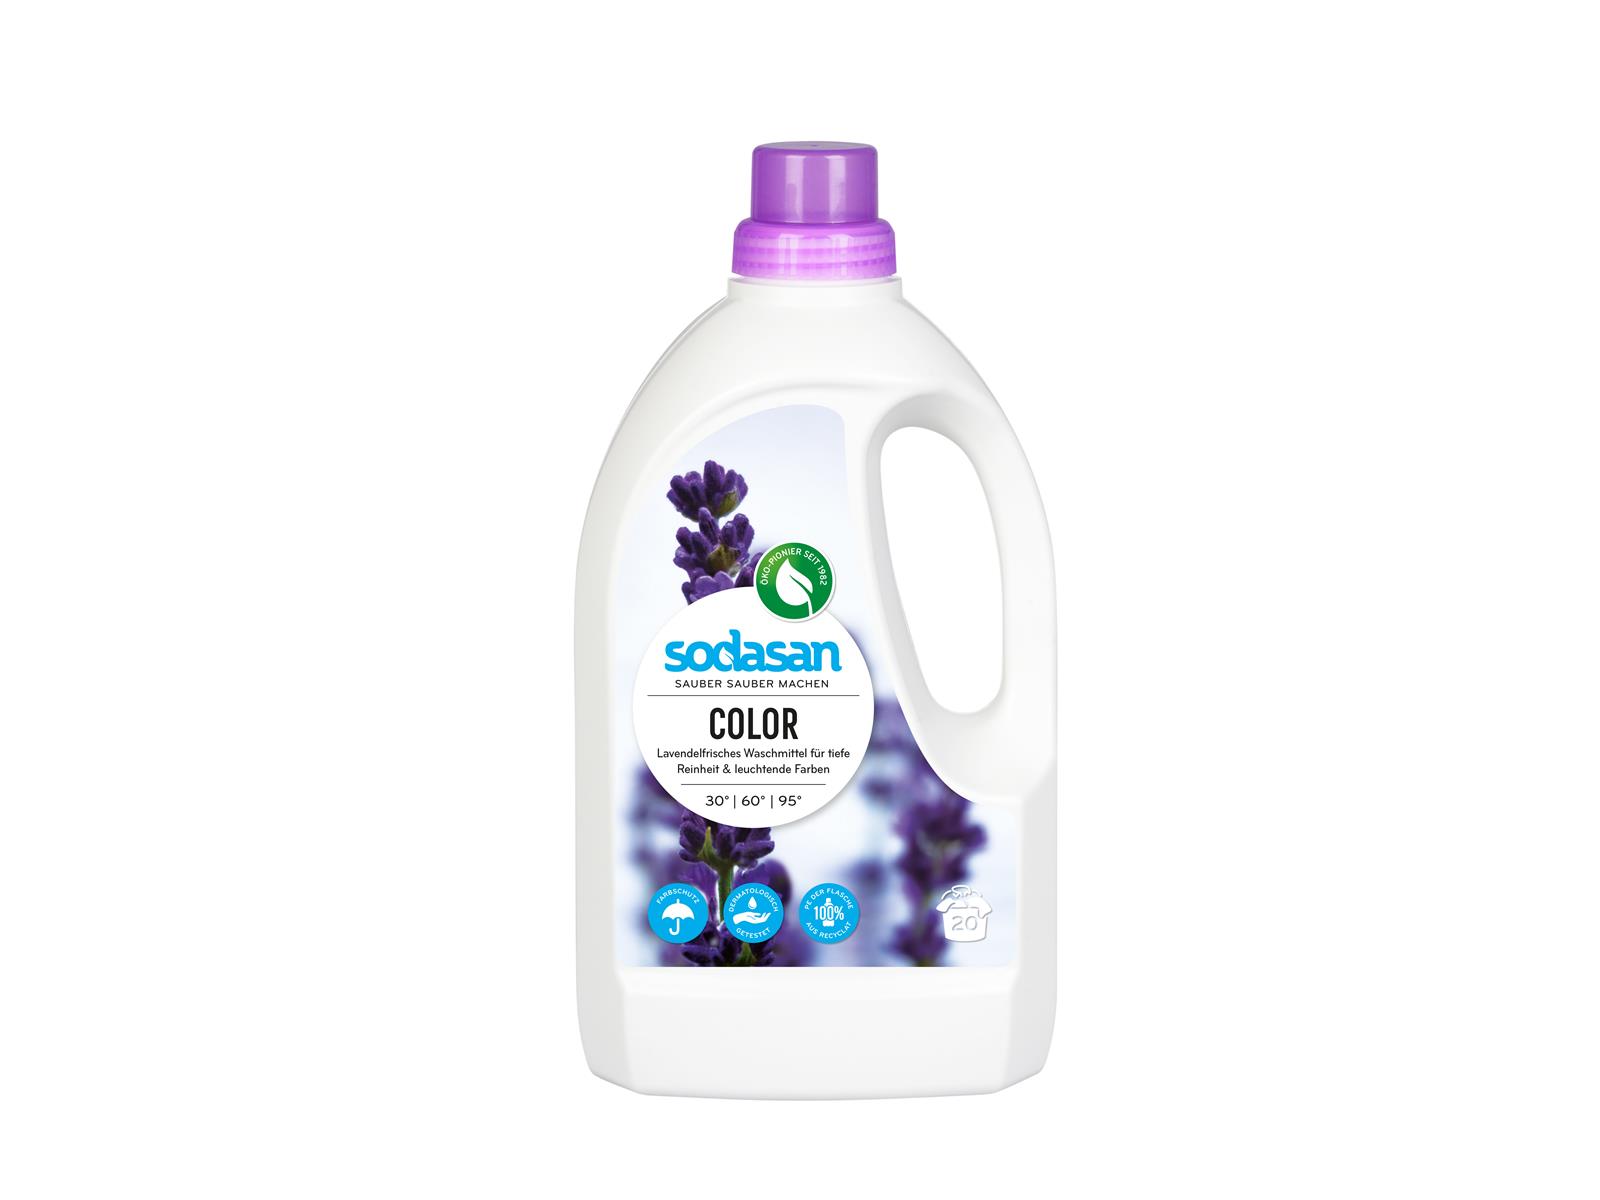 Sodasan Colorwaschmittel Lavendel 1,5l